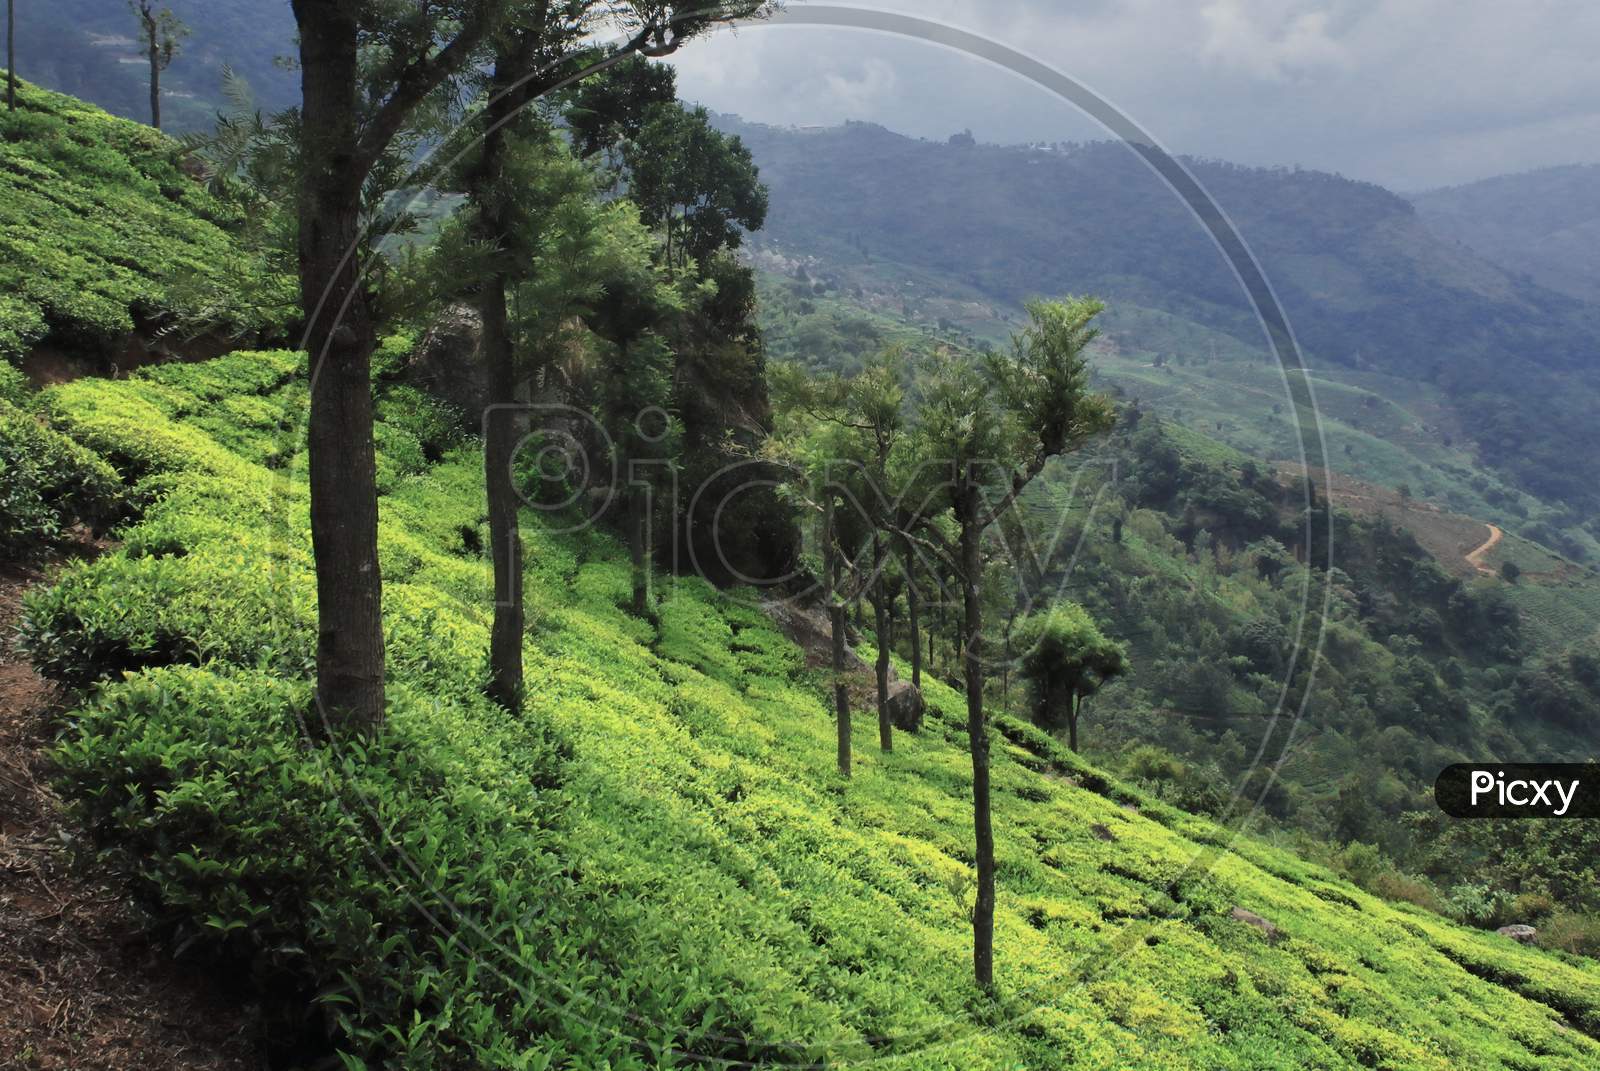 lush green coonoor tea garden on slope of nilgiri mountains at coonoor near ooty in tamilnadu, south india